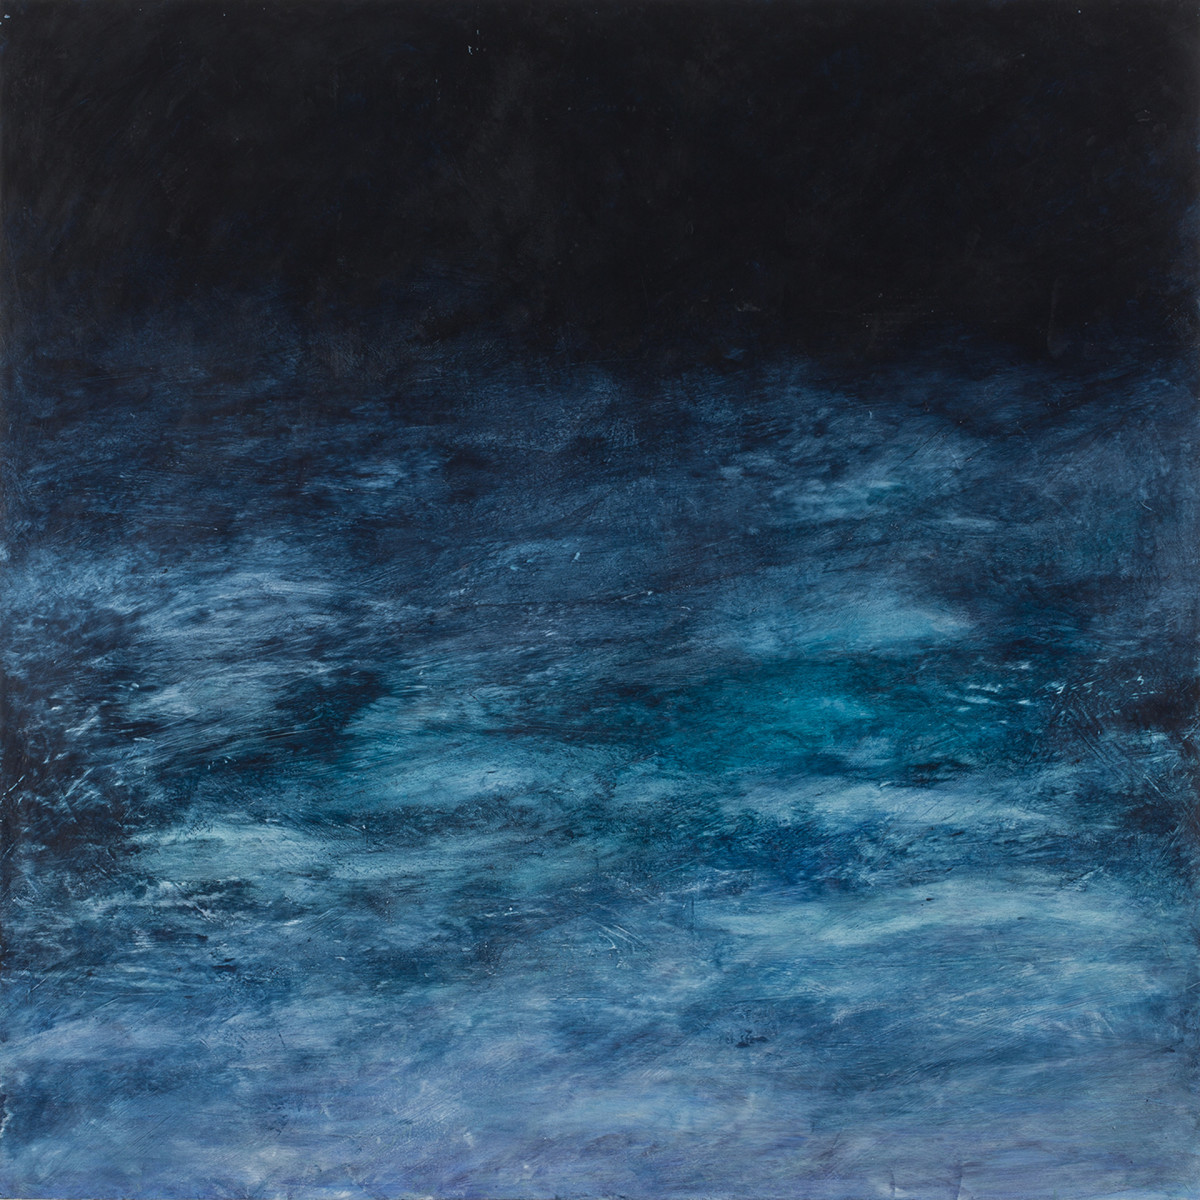 Sea Sky Series: At Night by Krista Machovina 